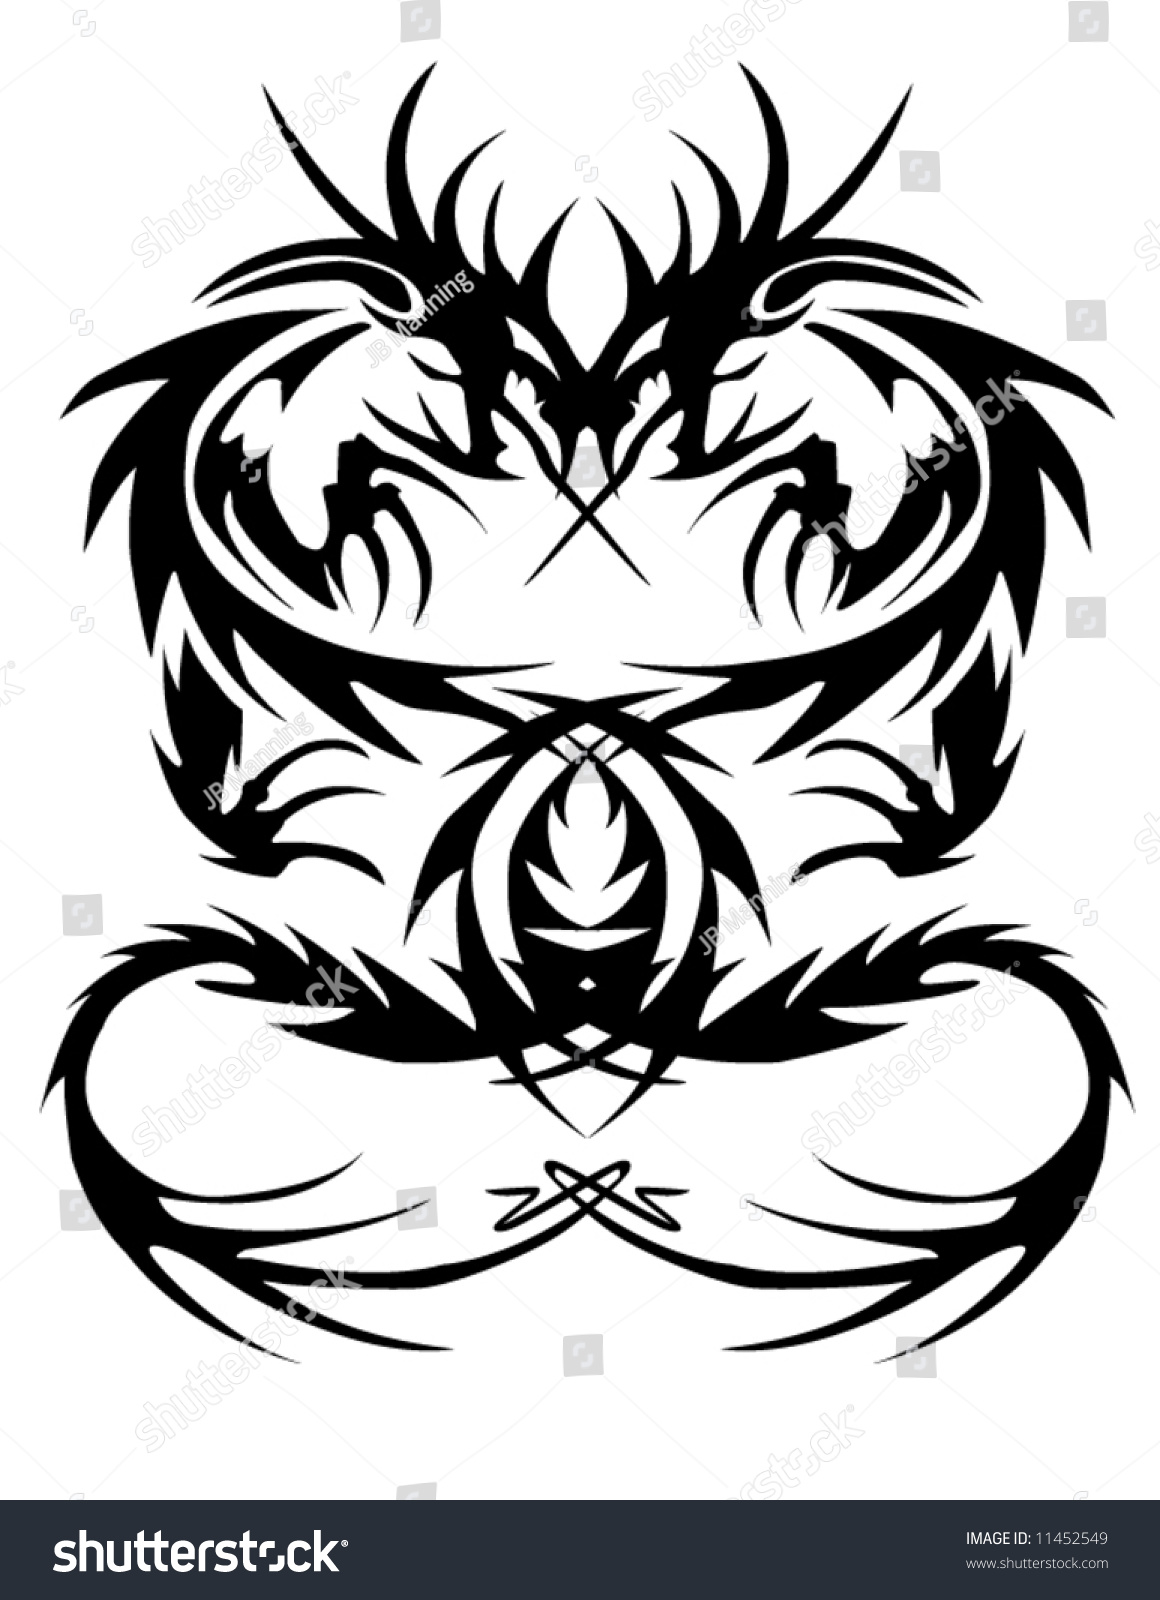 A Vector Of A Tribal Dragon Tattoo - 11452549 : Shutterstock